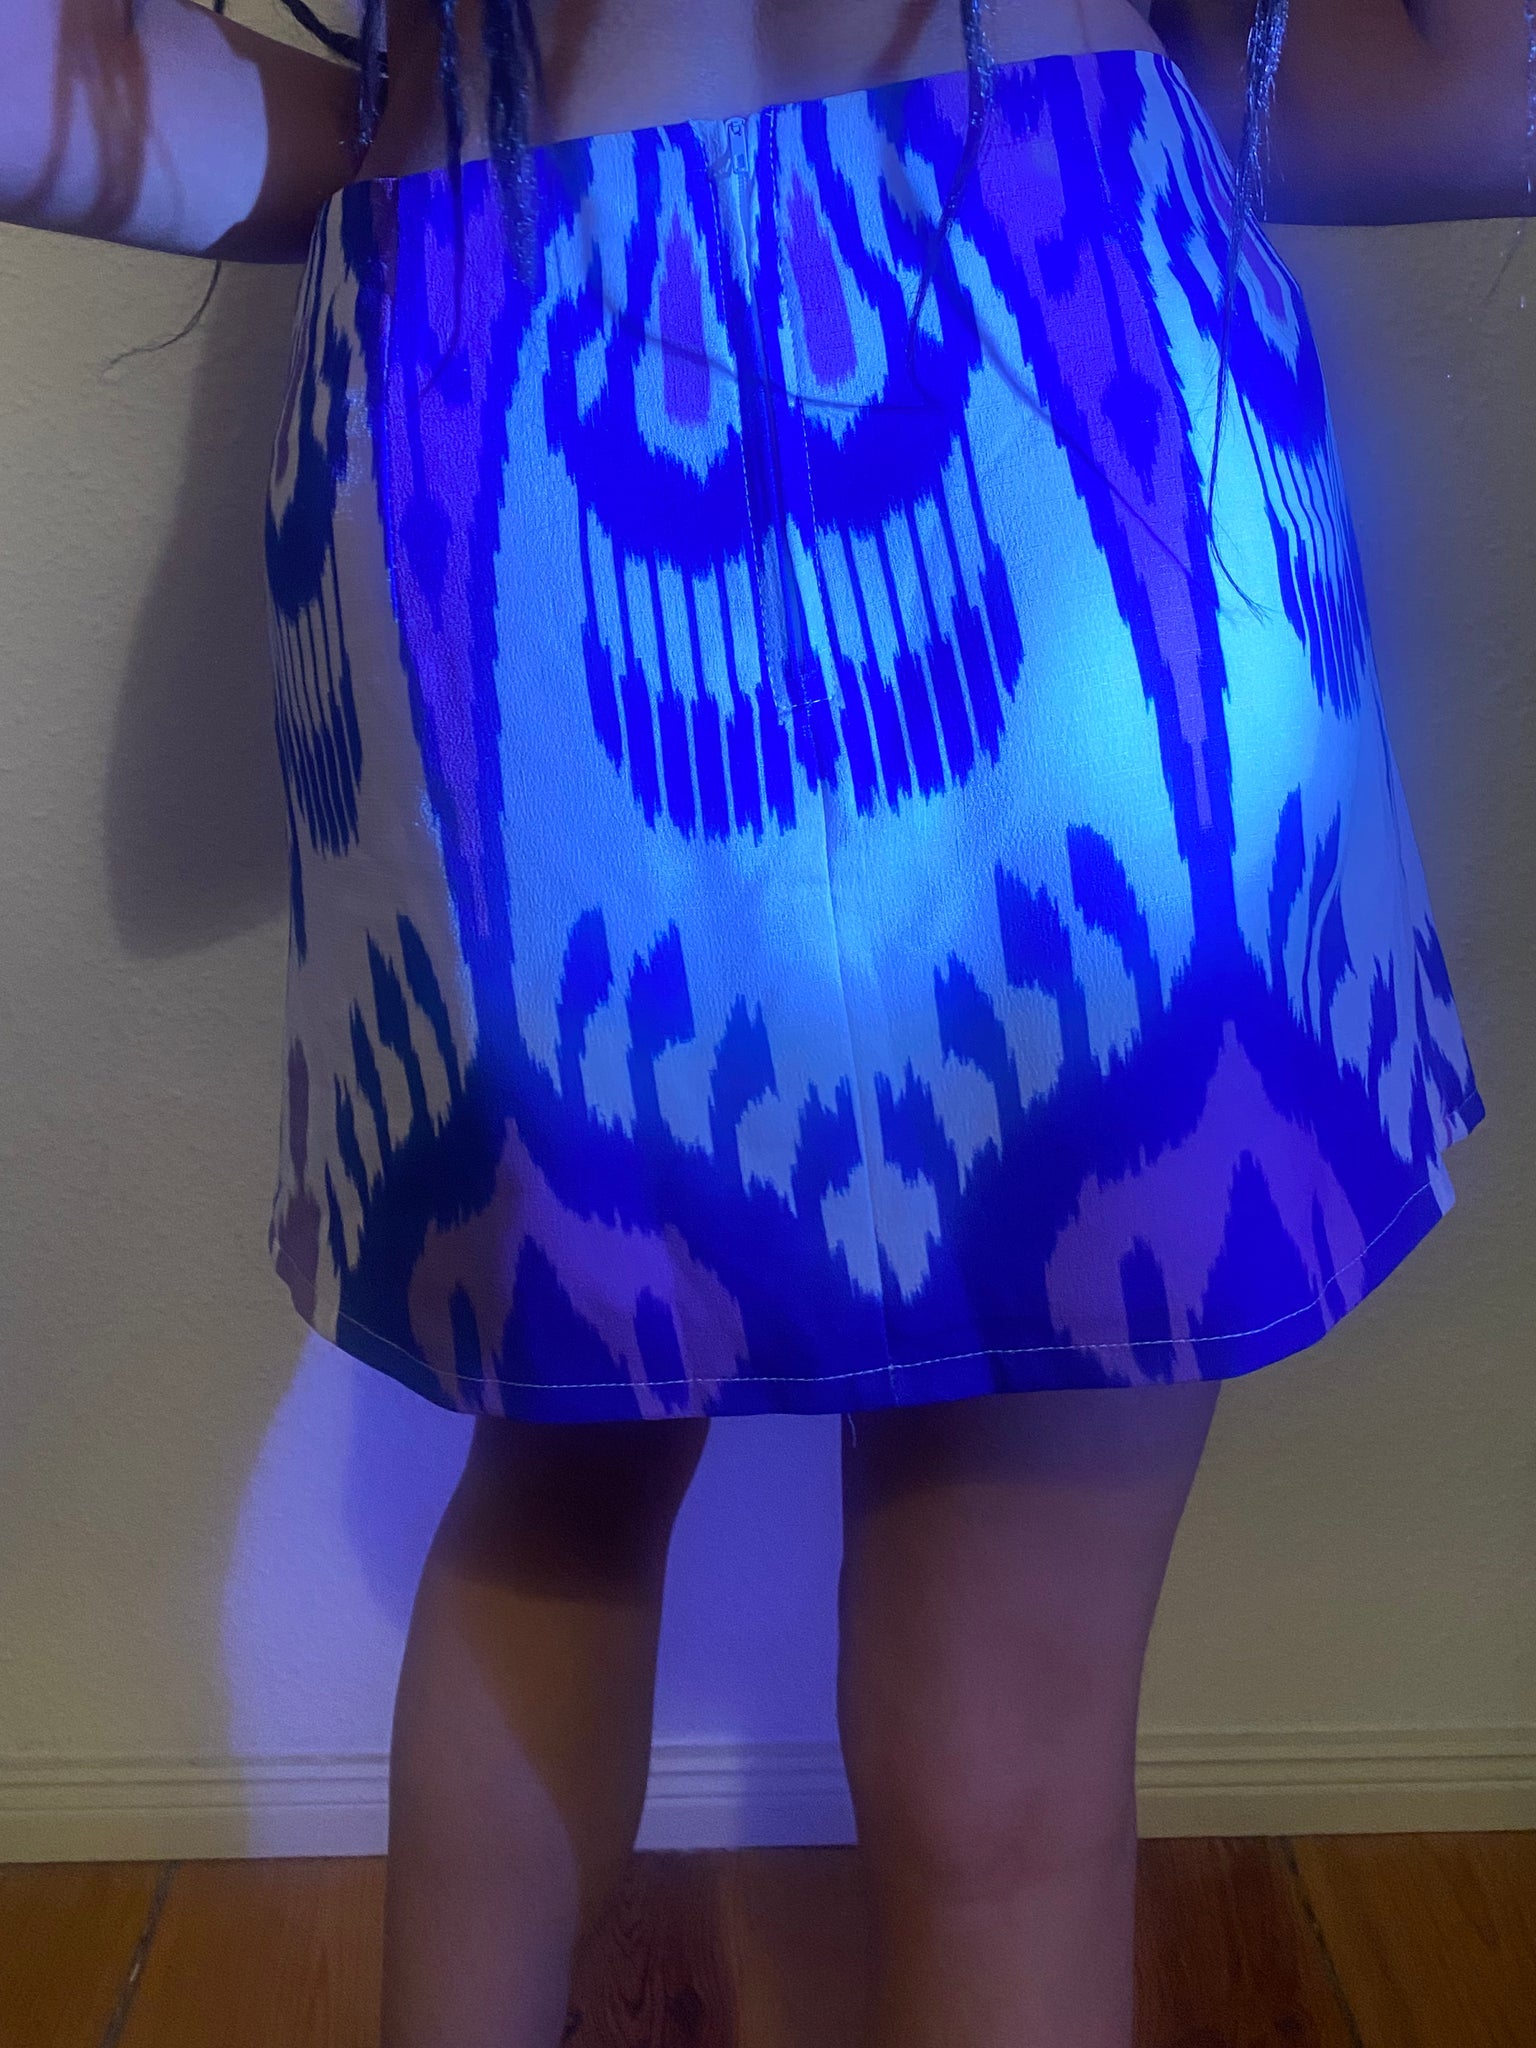 A blue light shines on Uzbeki fabric and the zip closure of the mini skirt.